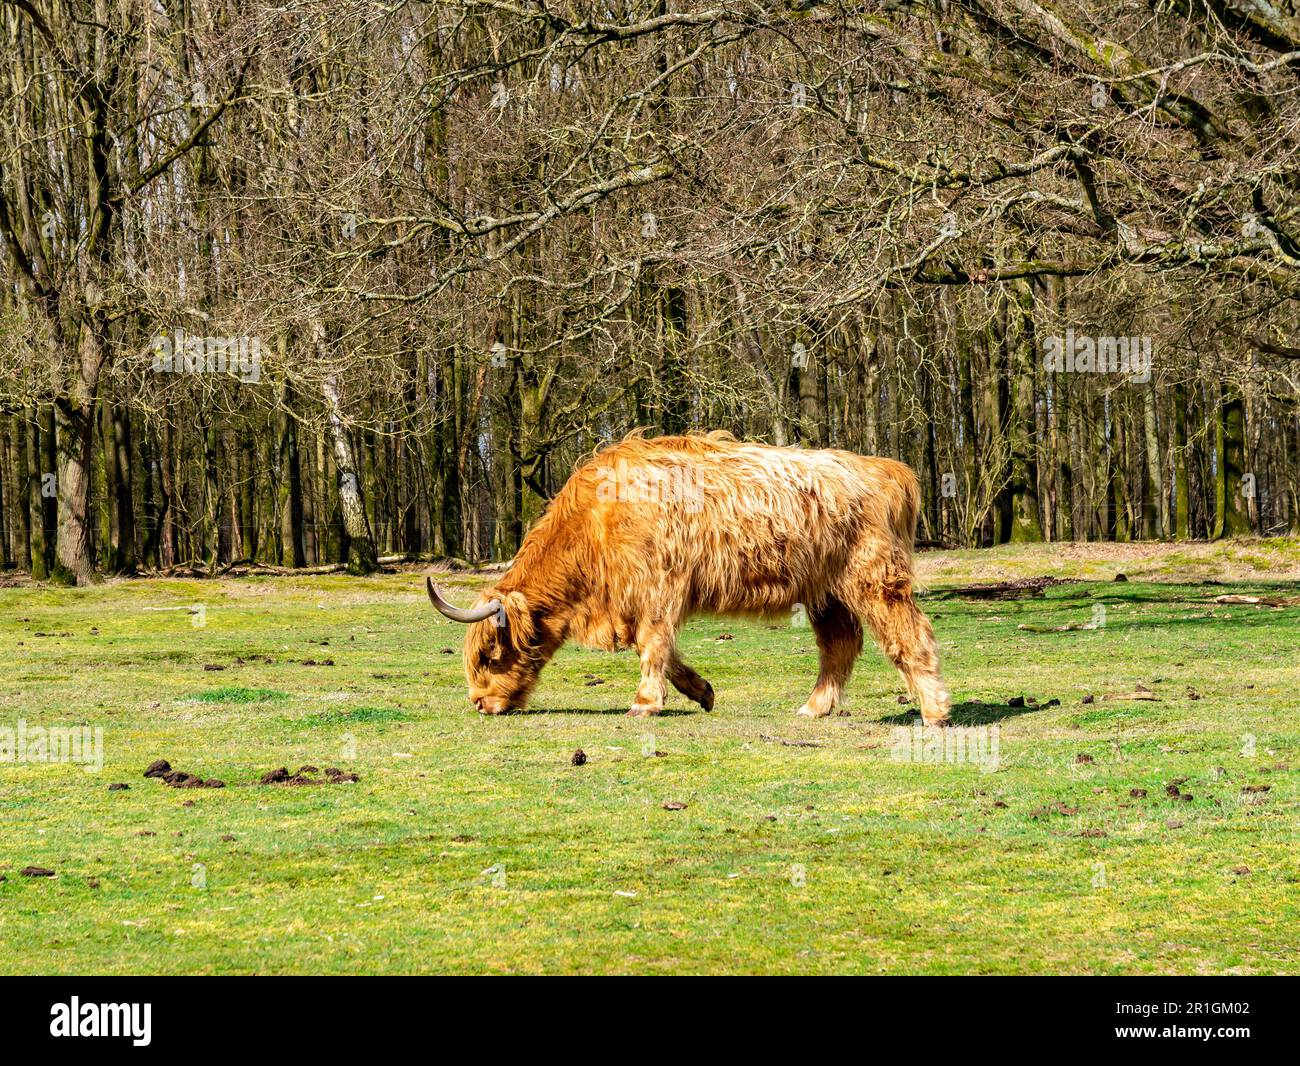 Scottish highland cow, brown with long hair and horns, grazing grass in nature reserve Westerheide near Hilversum, het Gooi, Netherlands Stock Photo